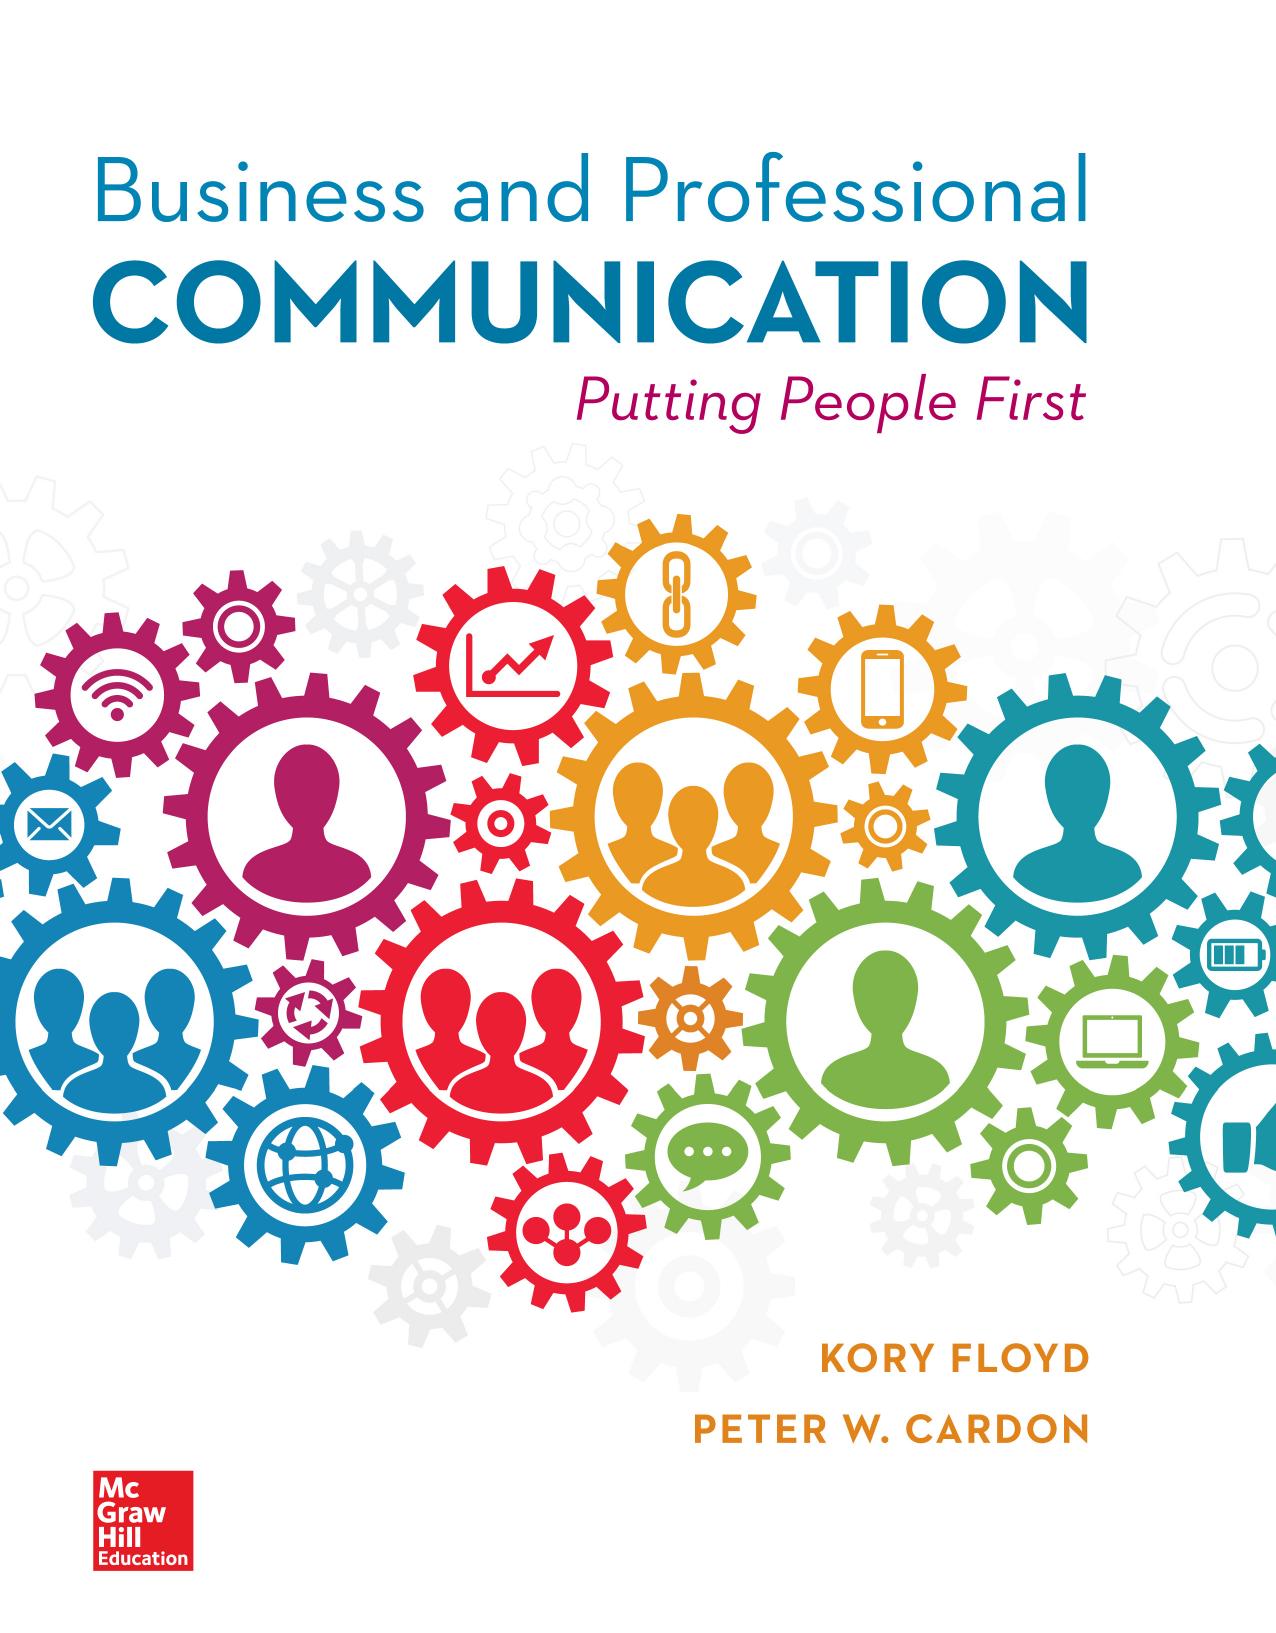 Business and Professional Commu - Kory Floyd.jpg